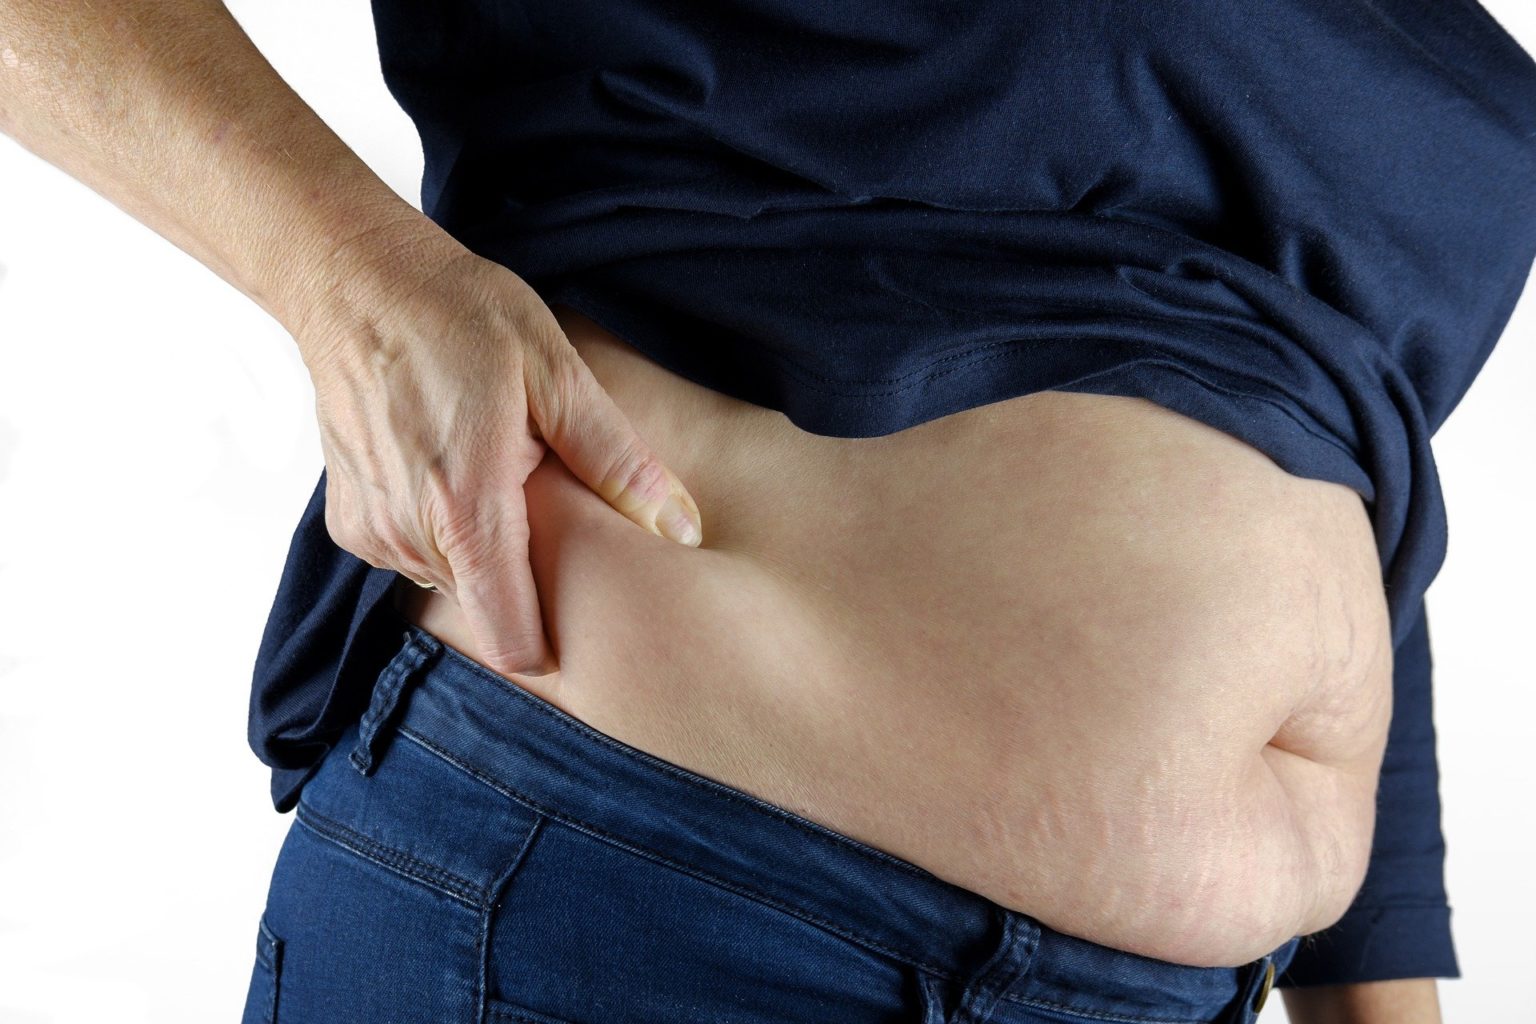 surpoids obesite epidemiologie Europe ventre graisse abdominale viscerale